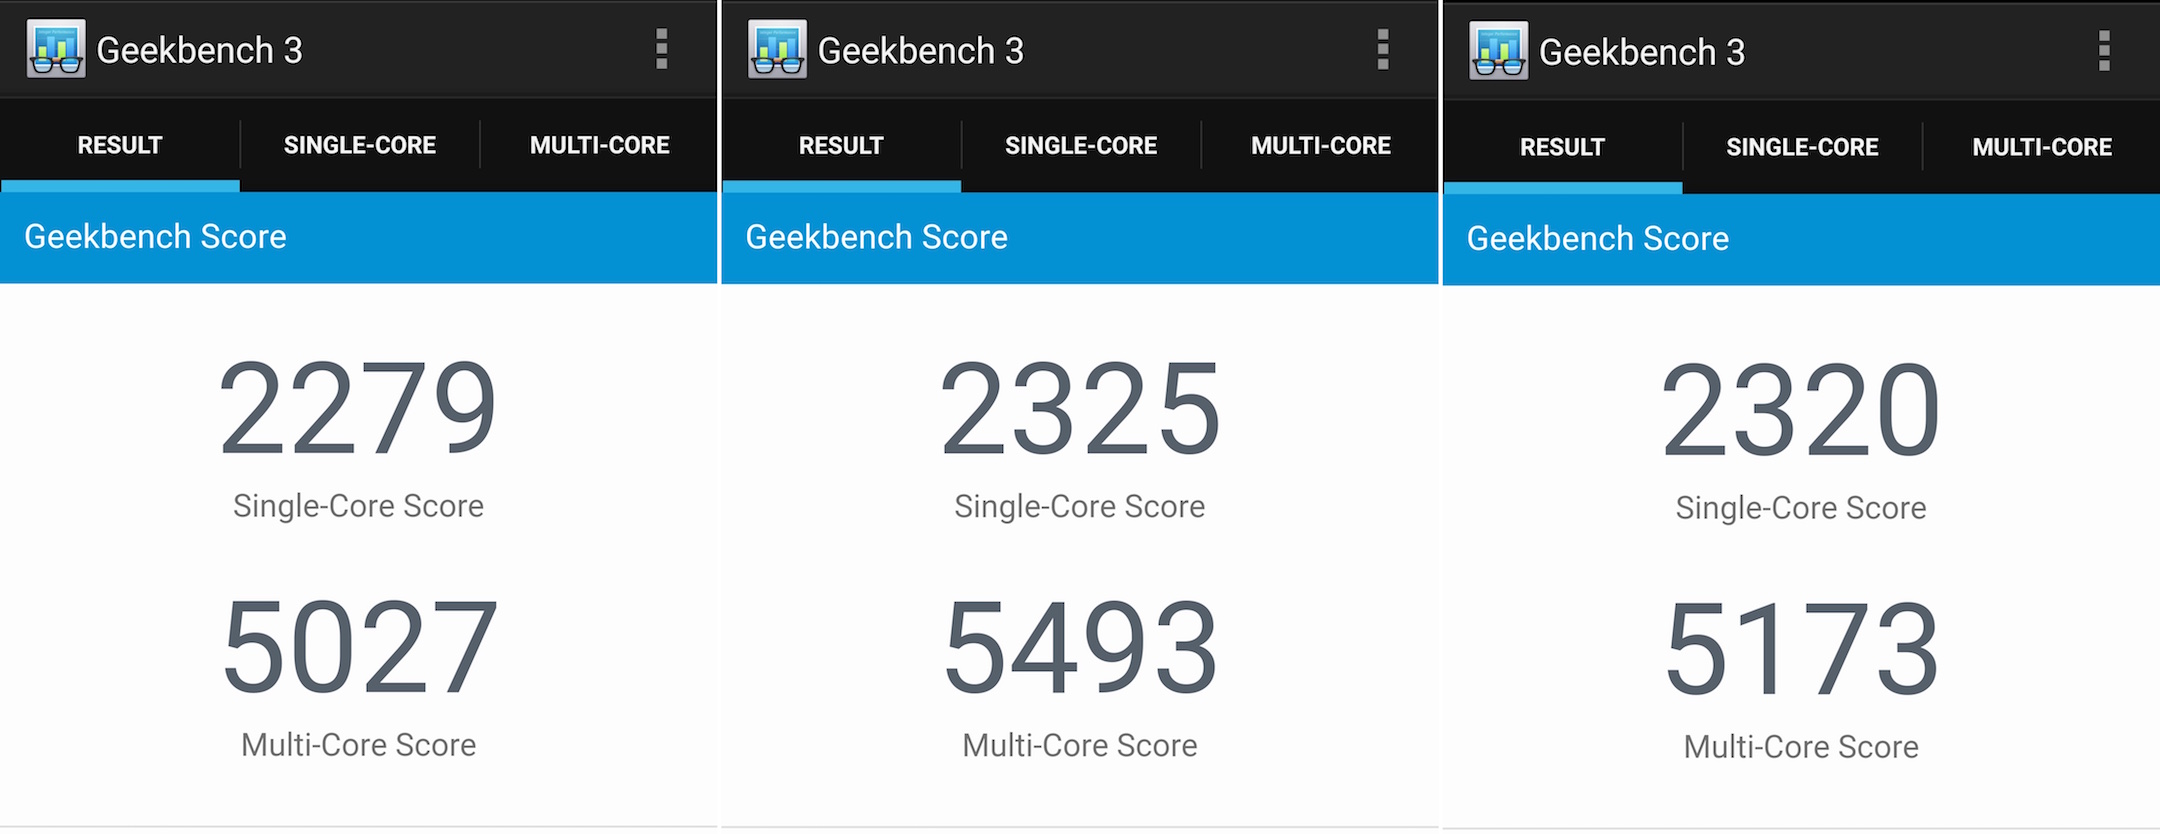 Benchmark compare LG G5